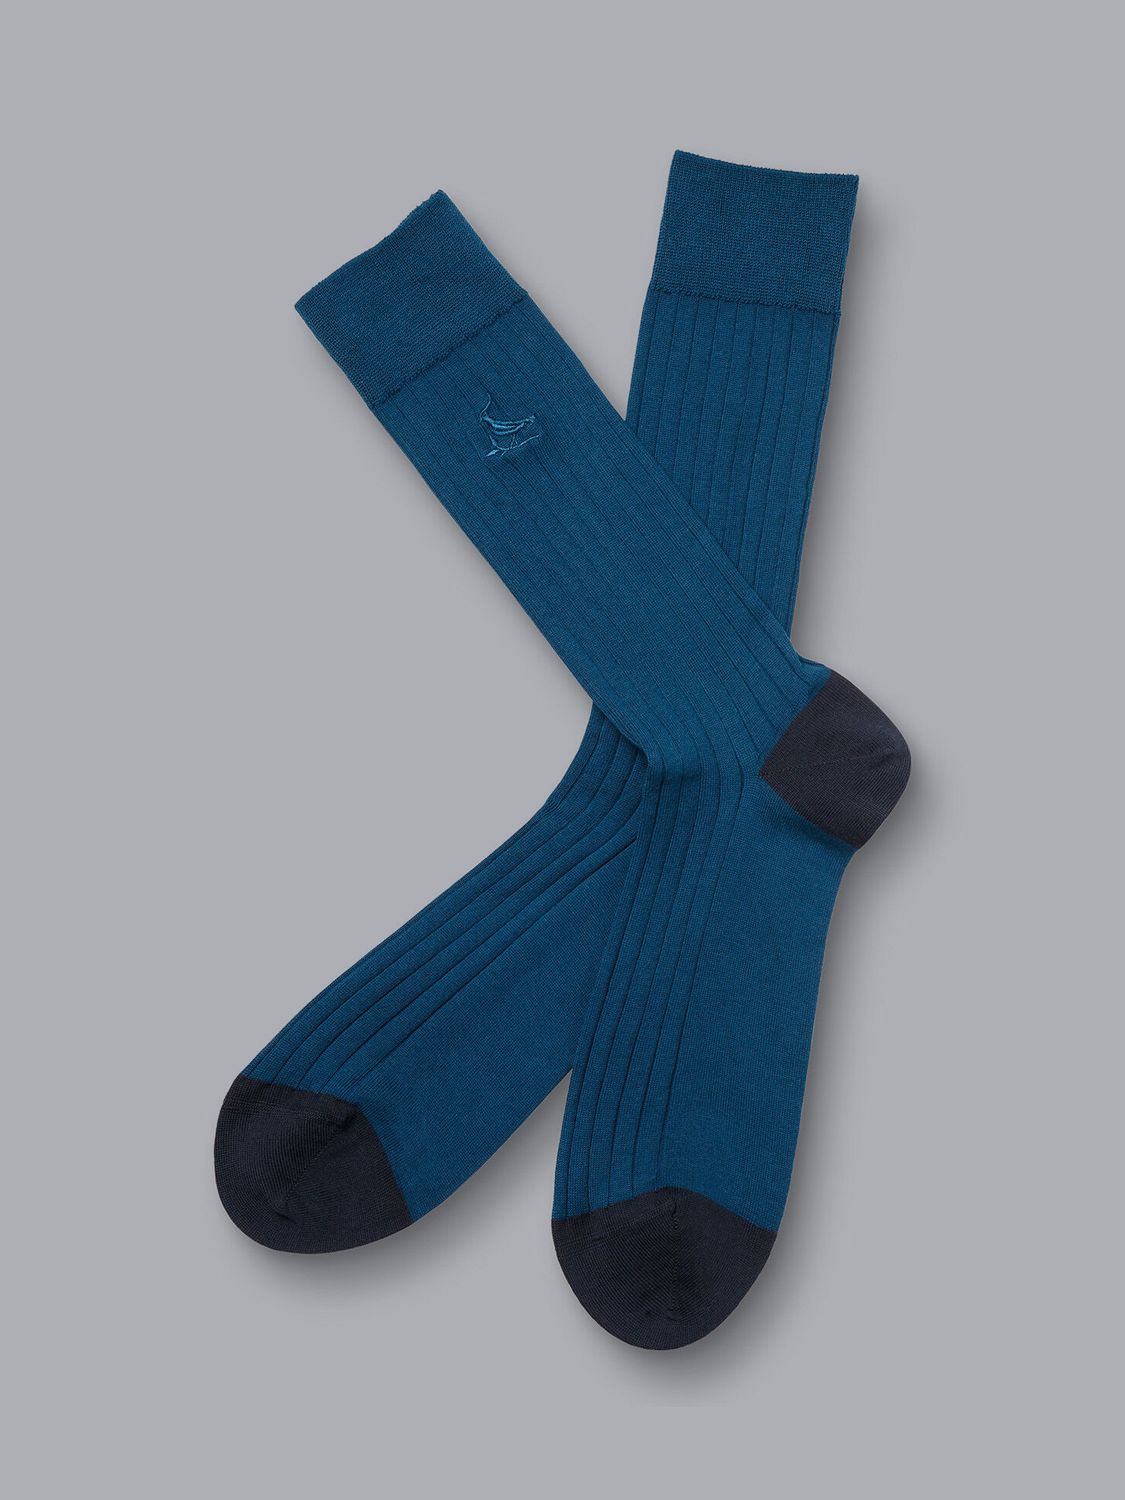 Charles Tyrwhitt Dark Green Cotton Rib Socks, Dark Turquoise Blue, M